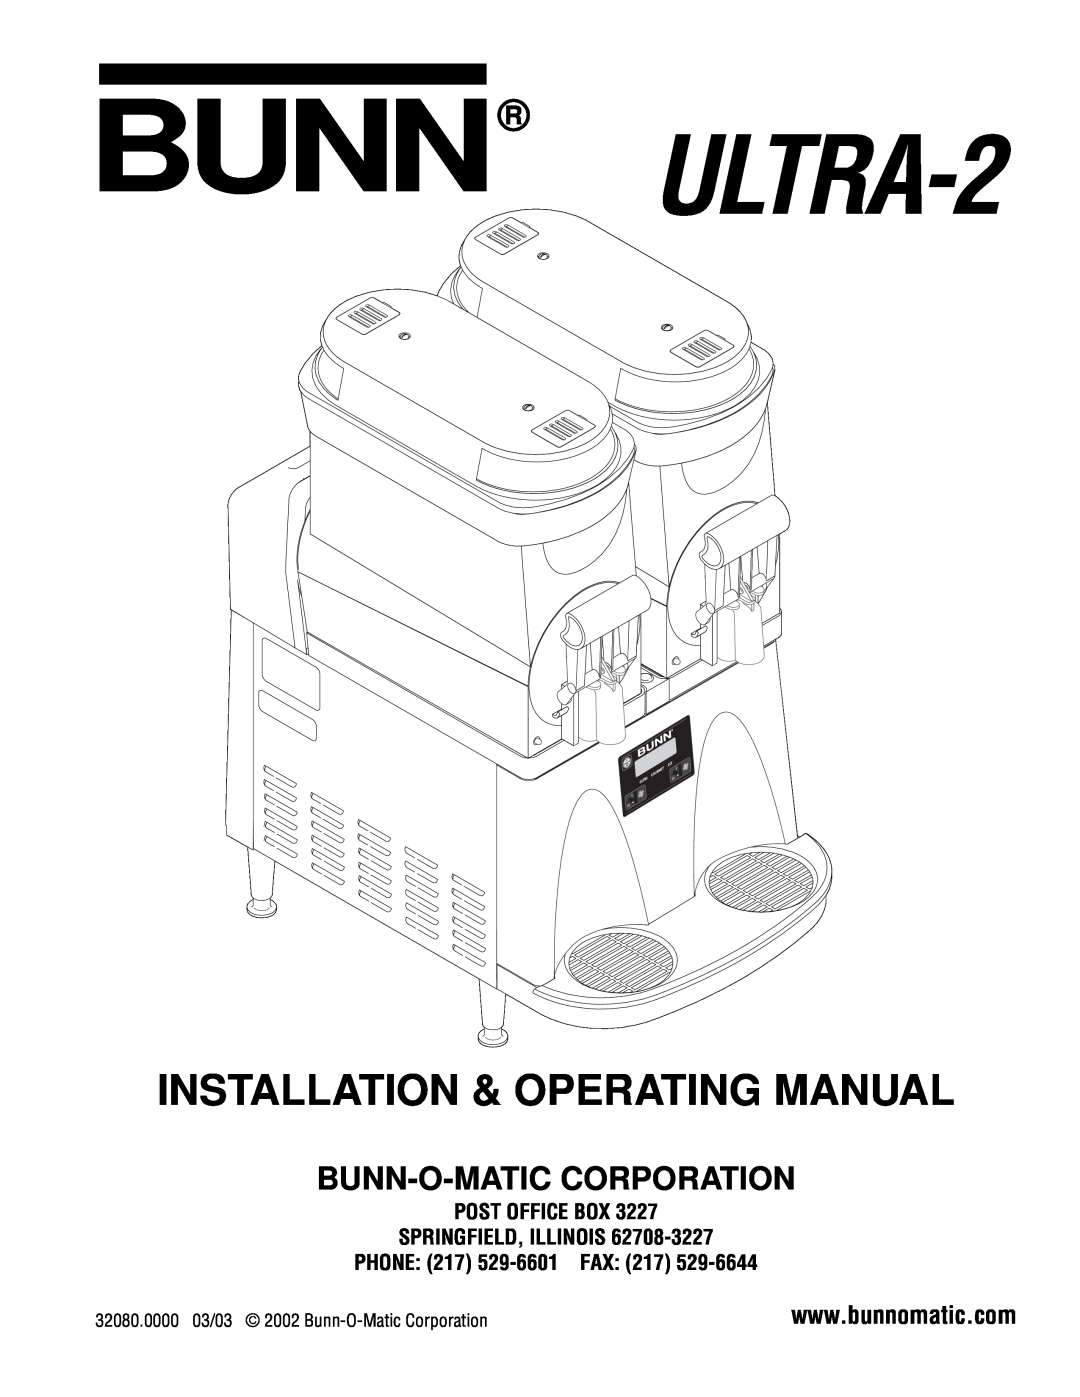 Bunn manual BUNN ULTRA-2, Installation & Operating Manual, Bunn-O-Matic Corporation 